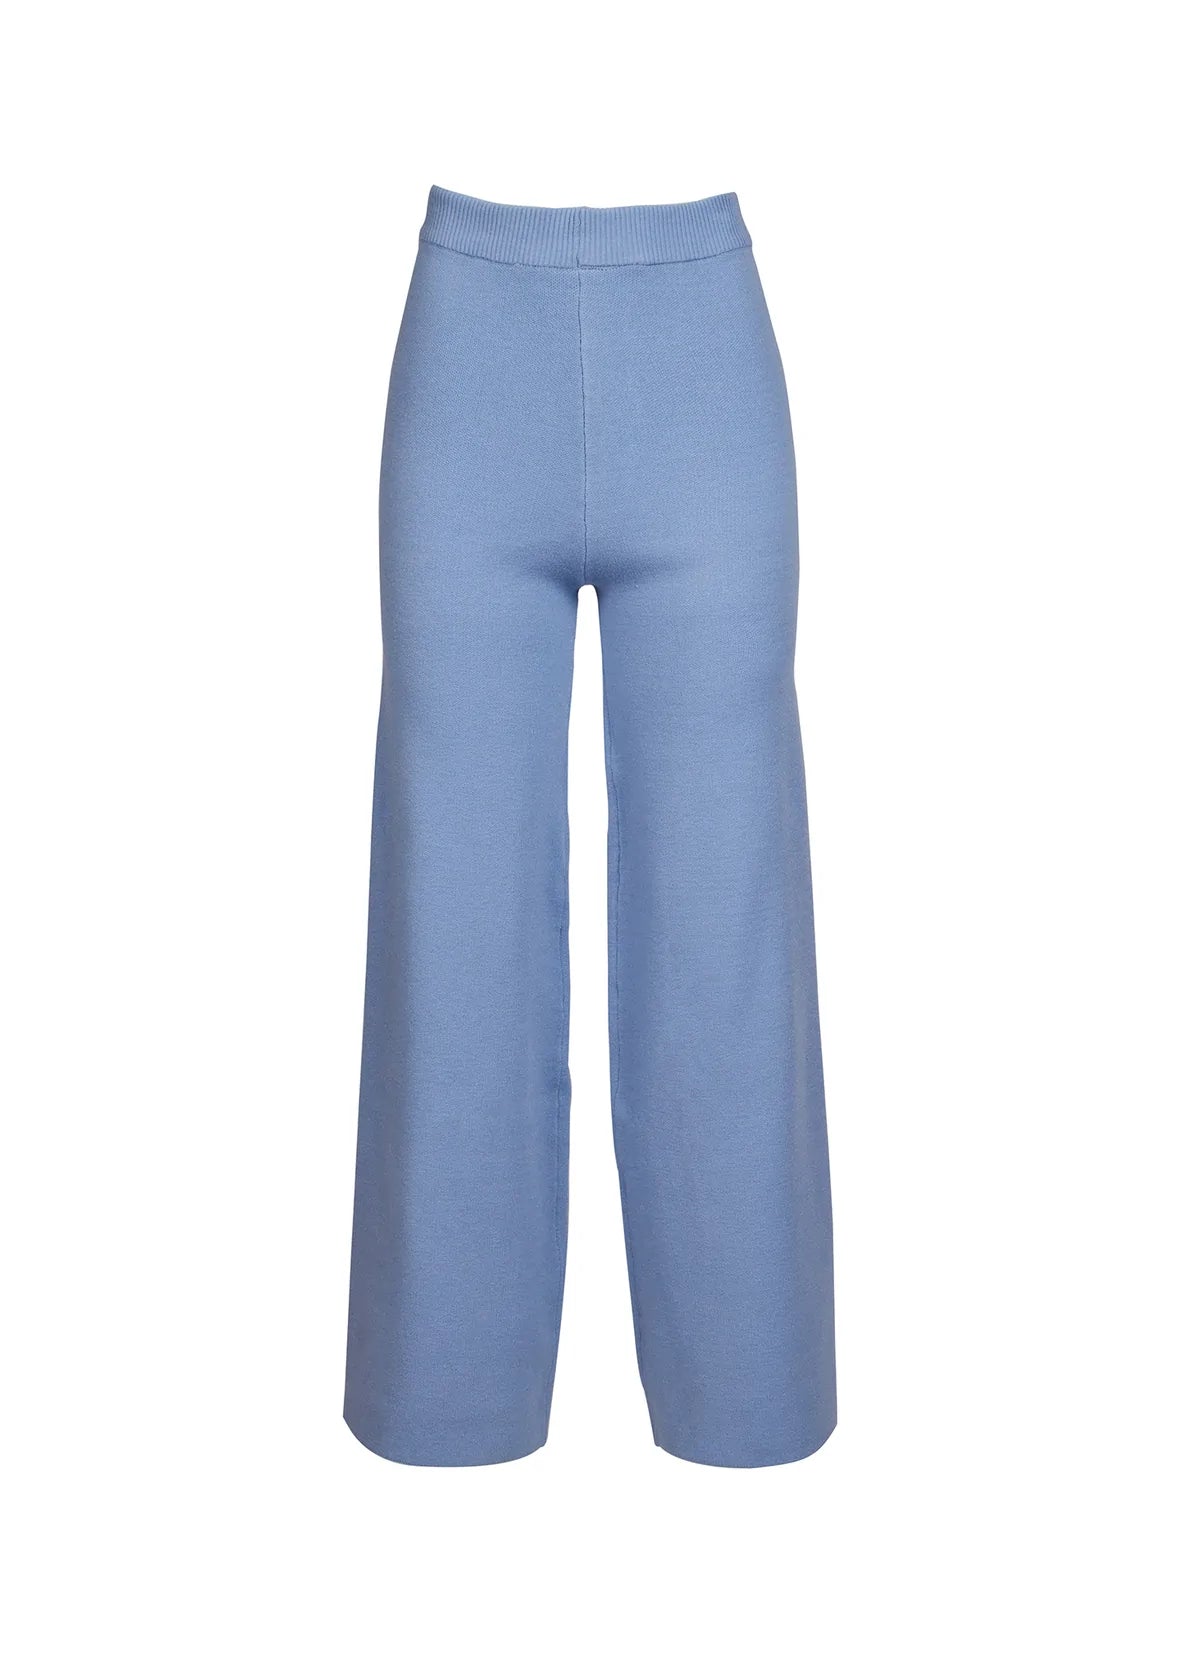 Hilary McMillan Blue Leisure Suit